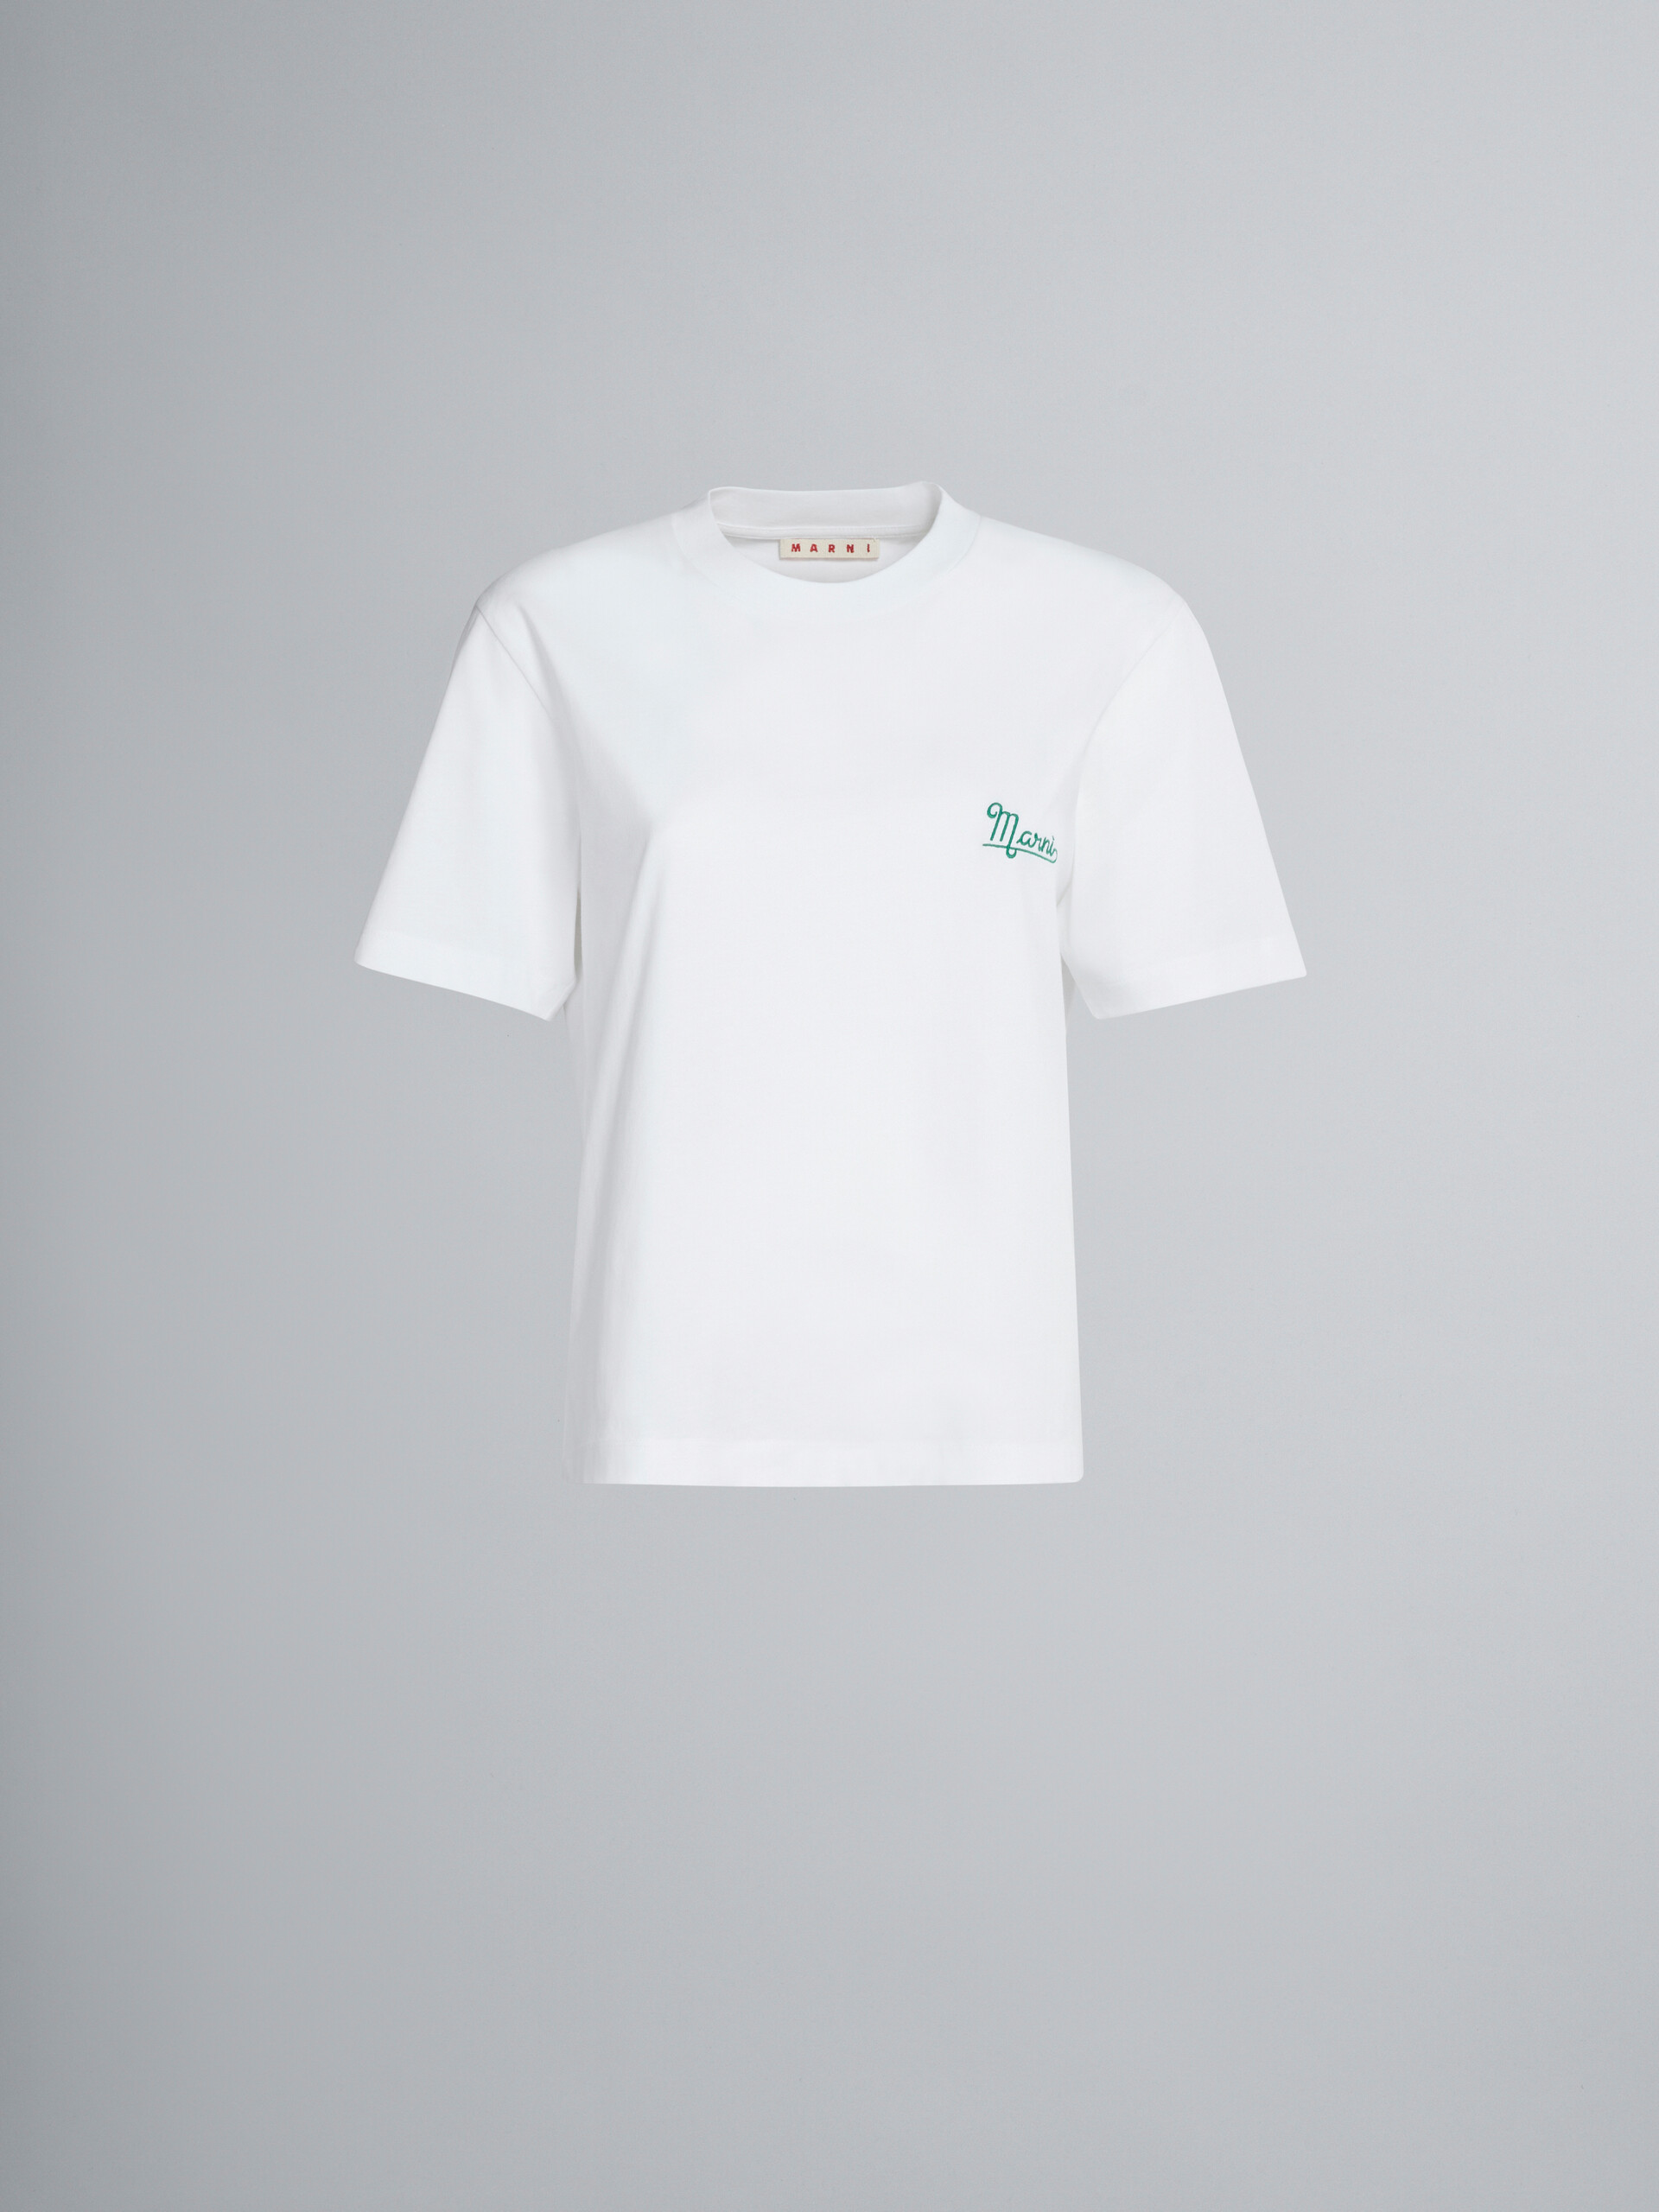 3er-Set T-Shirts aus Baumwolljersey mit aufgesticktem Logo - T-shirts - Image 1